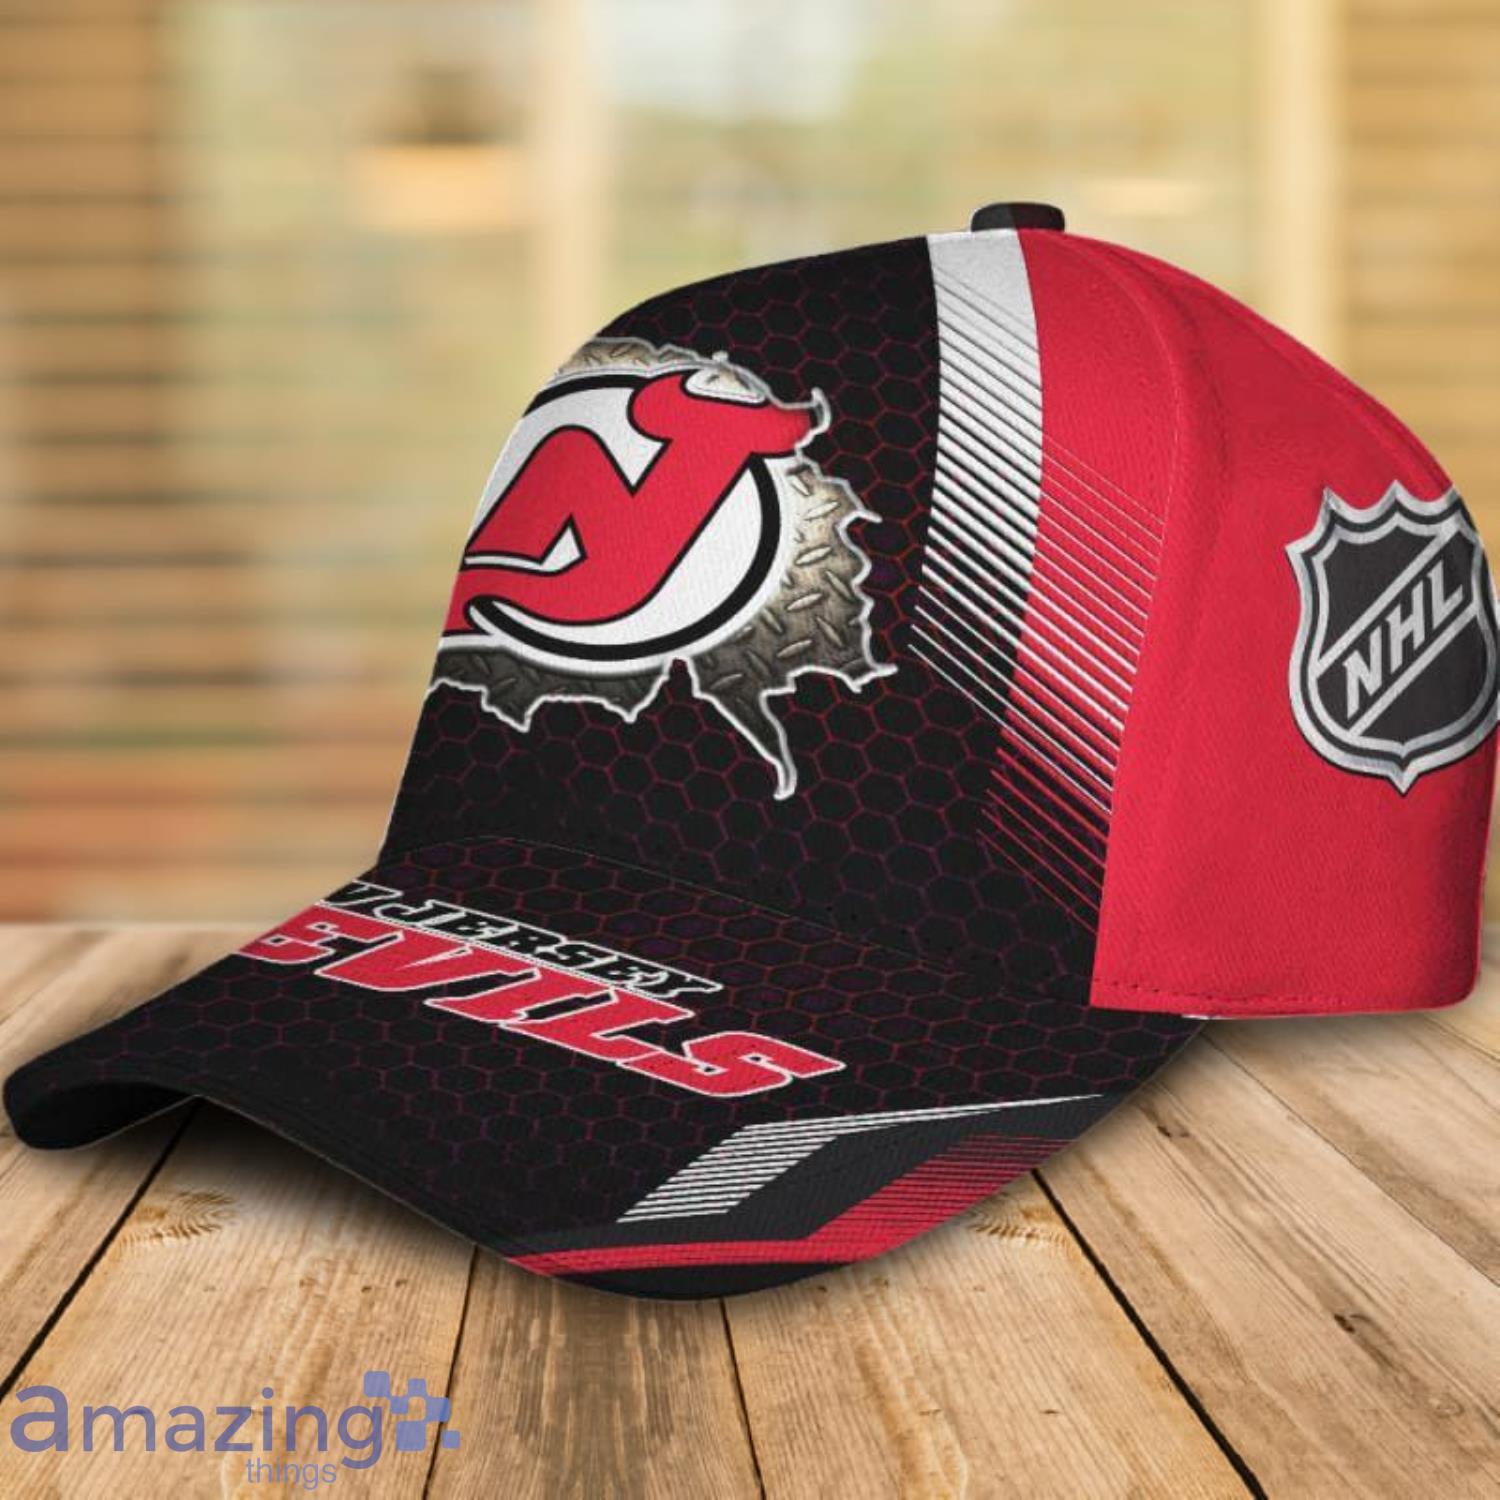 New Jersey Devils Hat 